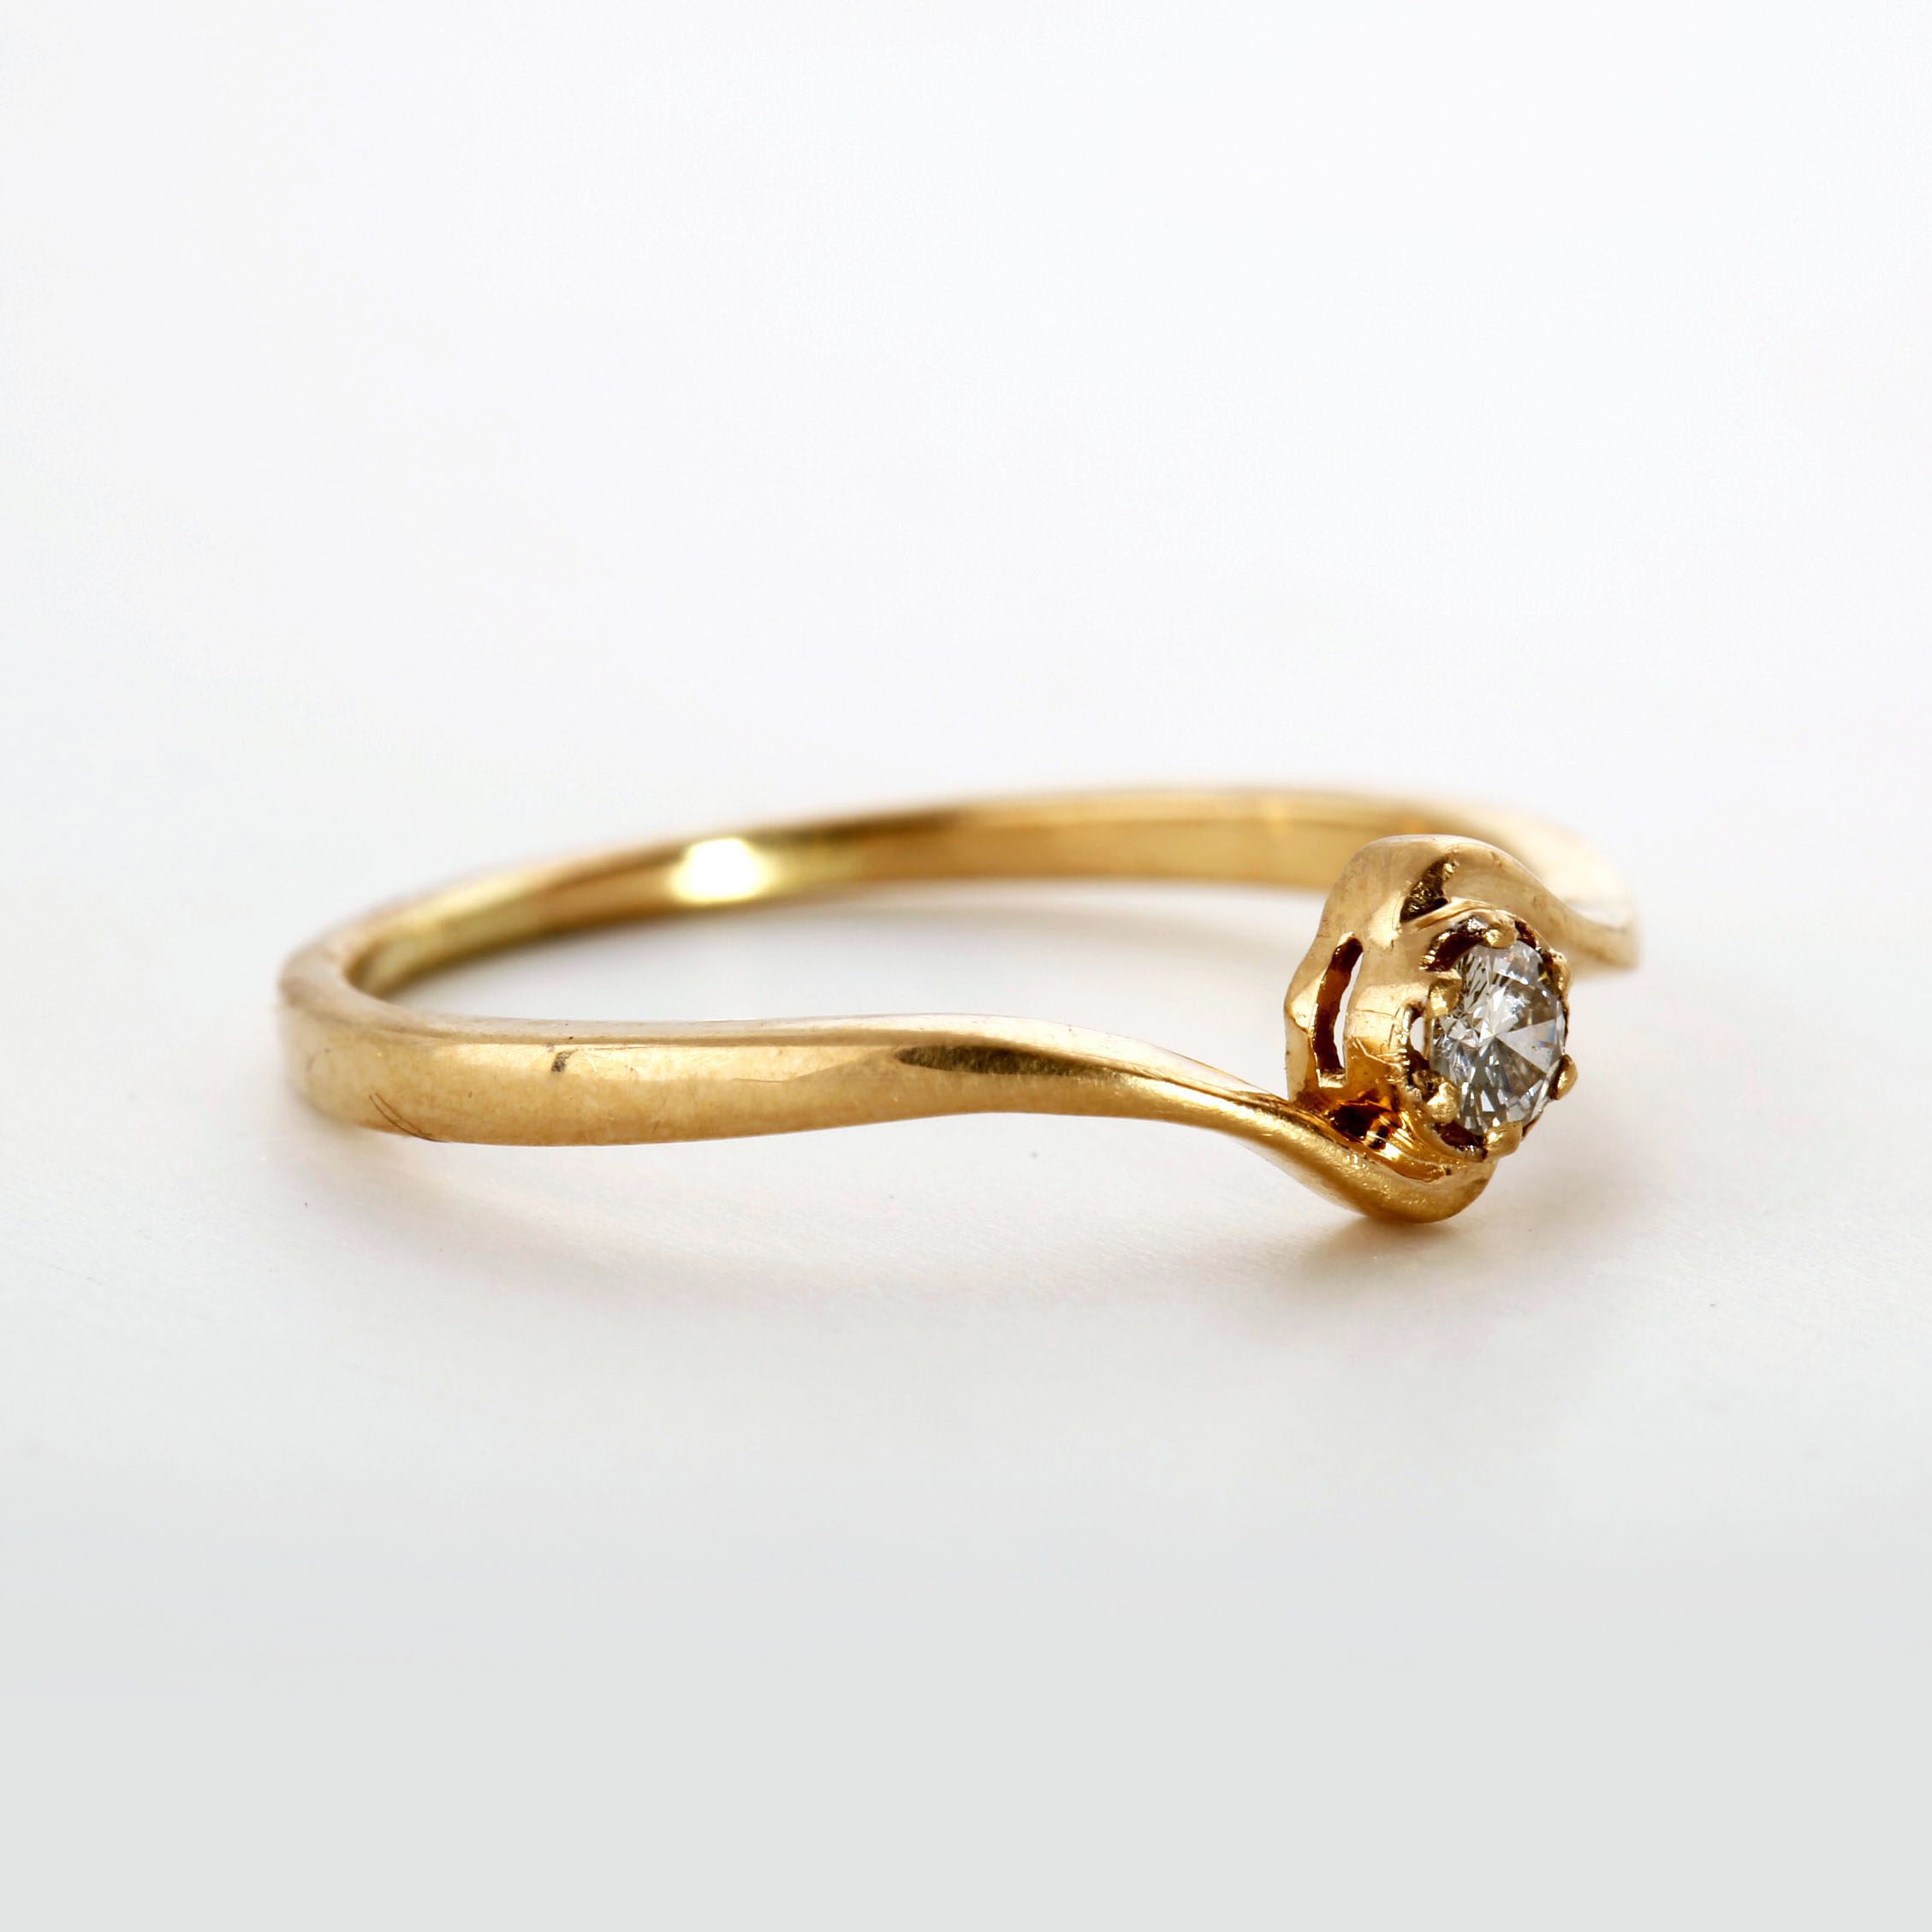 Buy Gold Rings online for men and women from Senco Gold